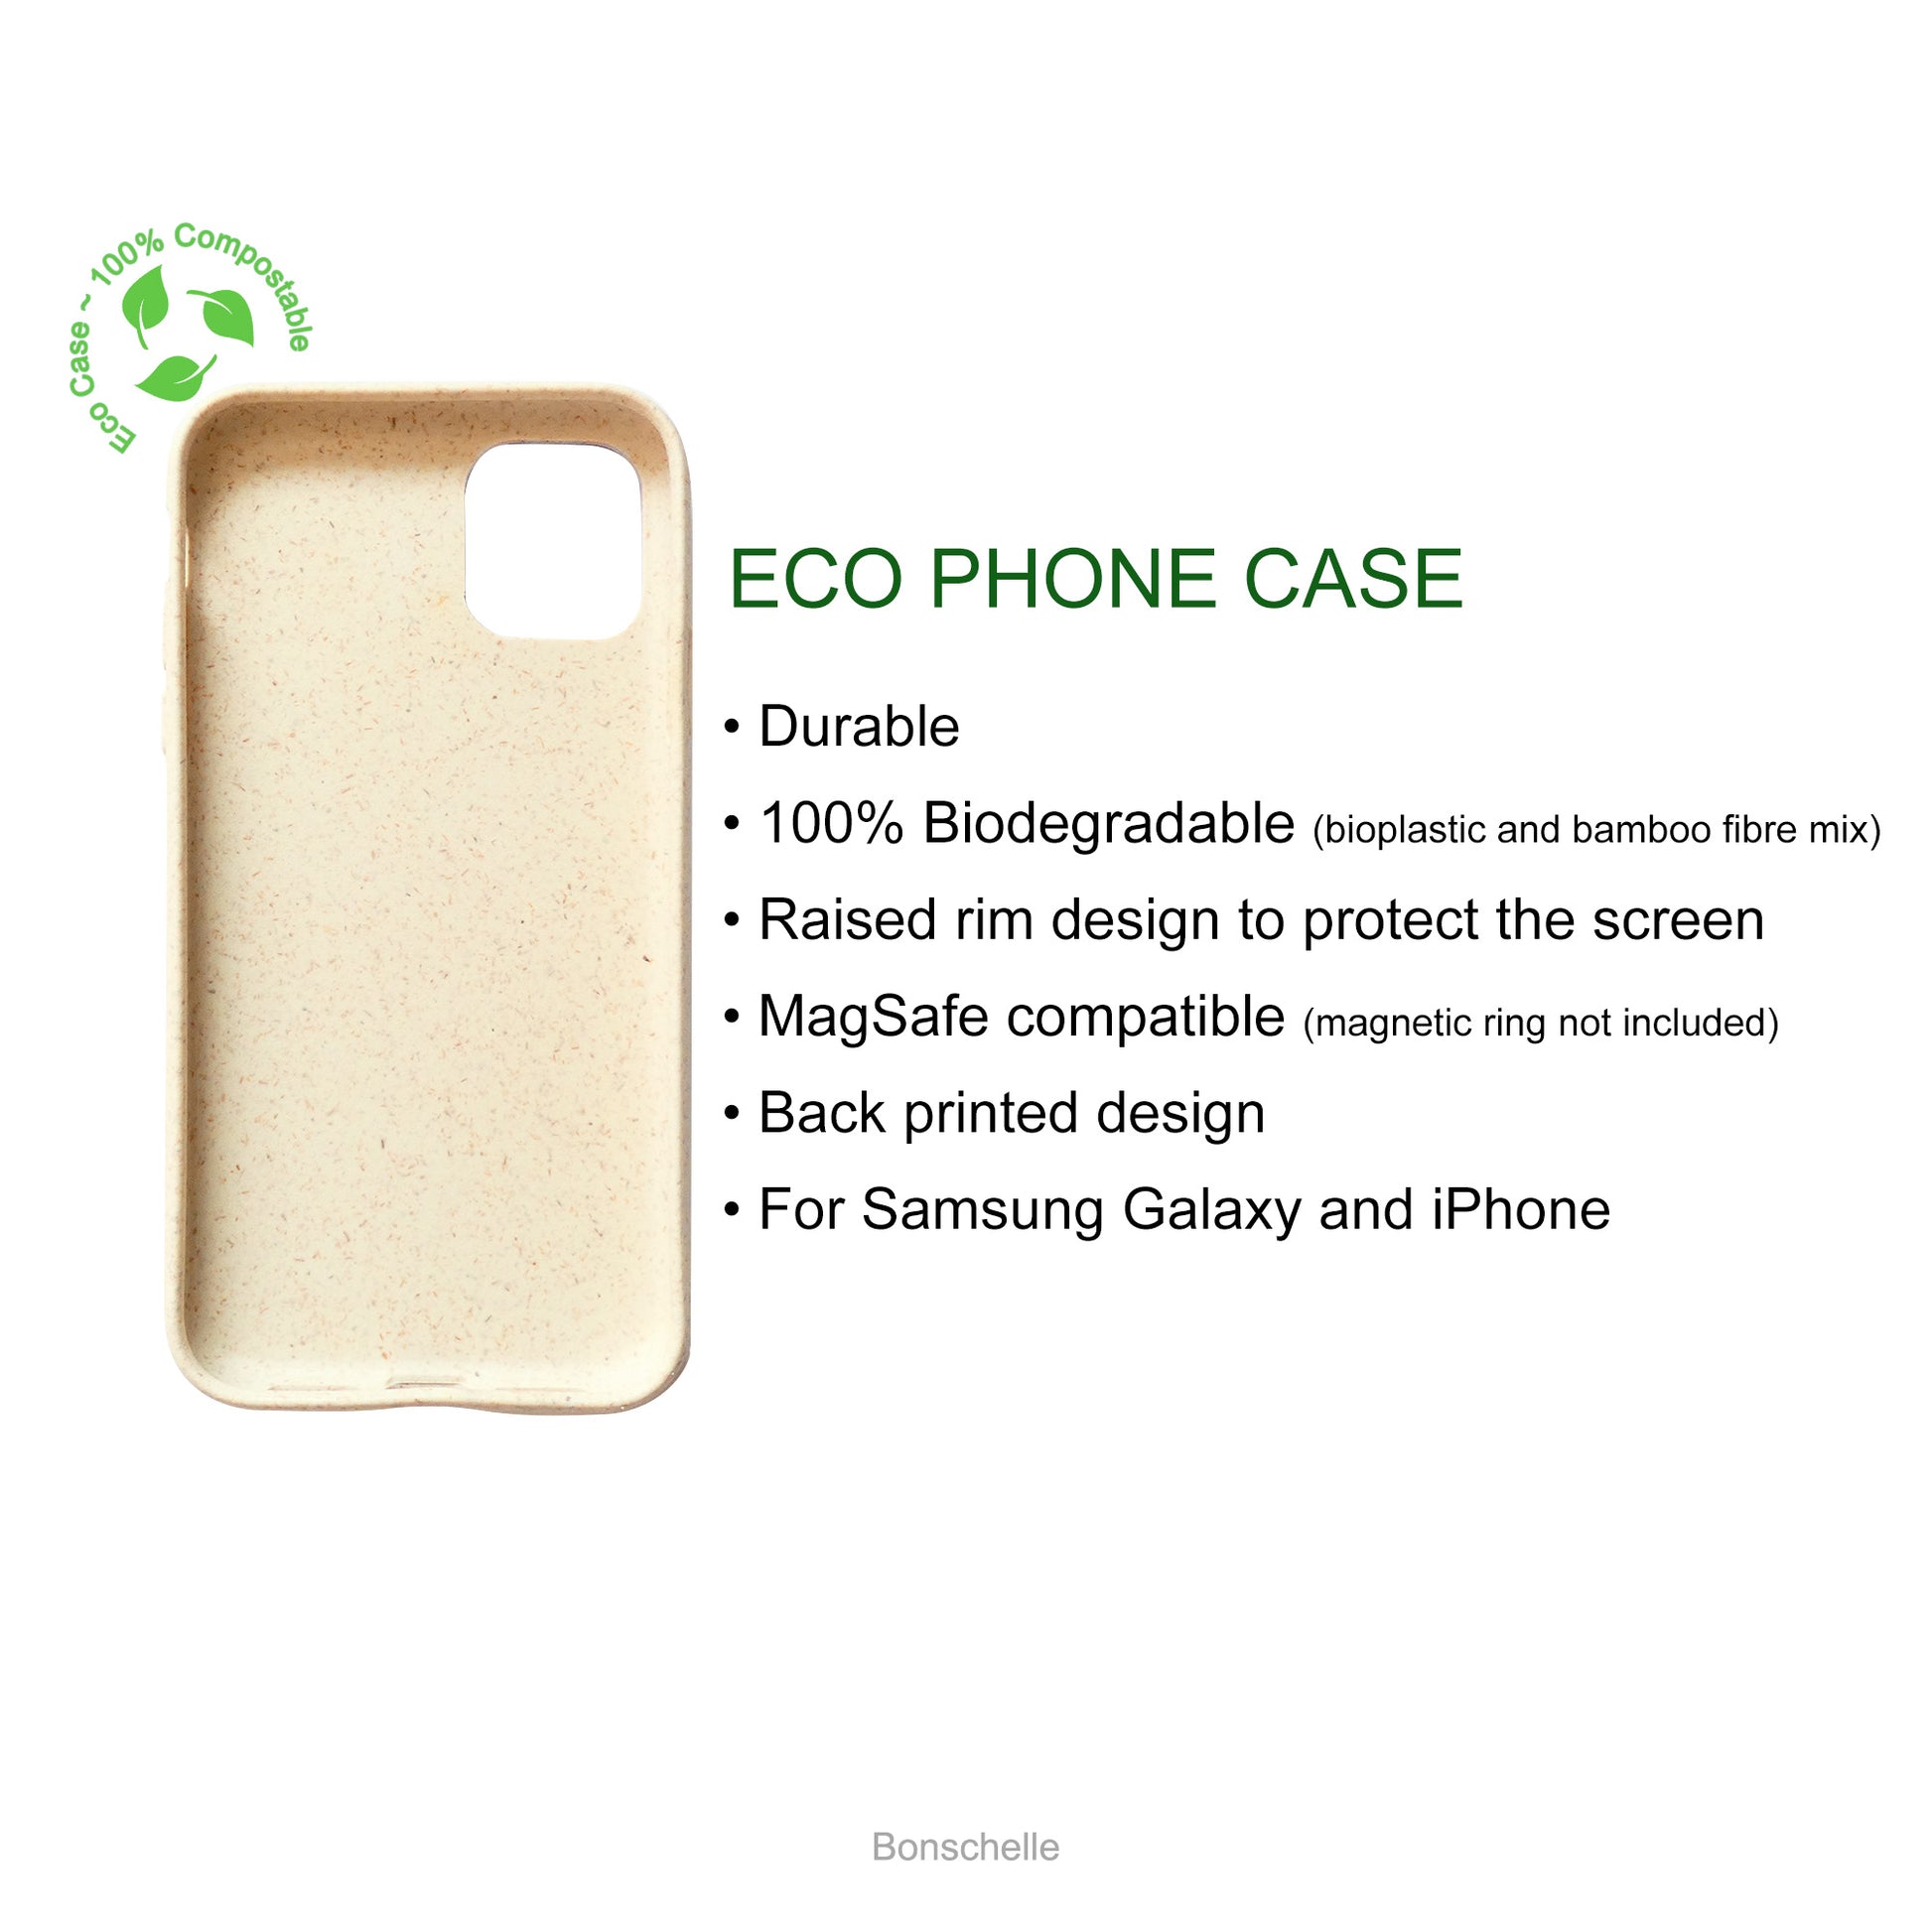 Eco phone case details